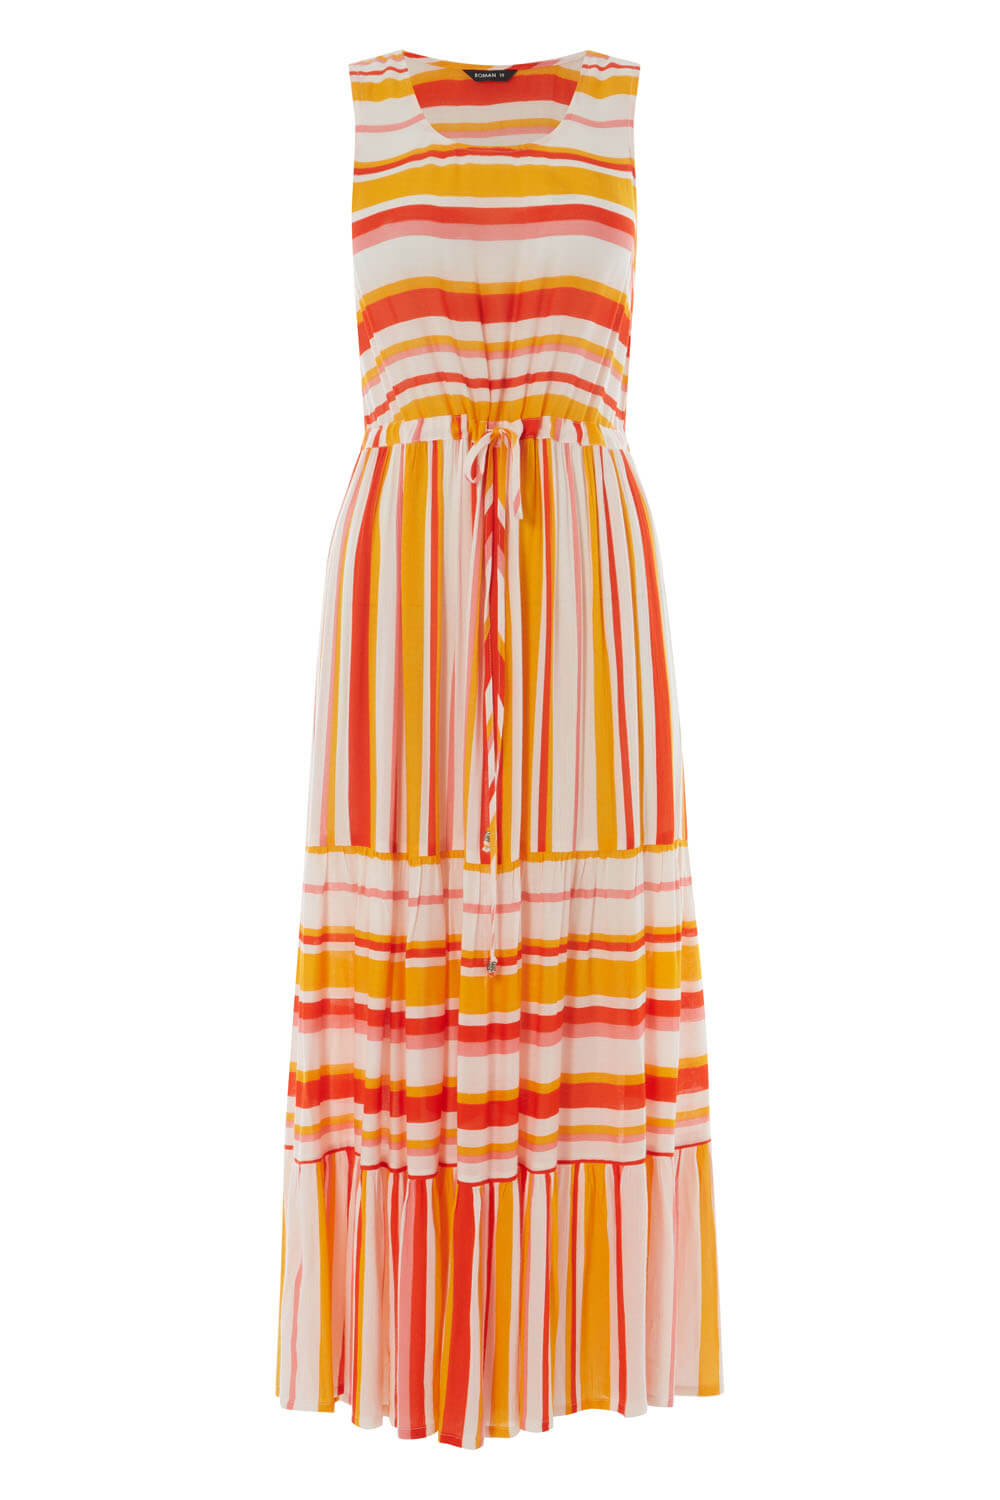 ORANGE Stripe Tiered Maxi Dress, Image 4 of 4